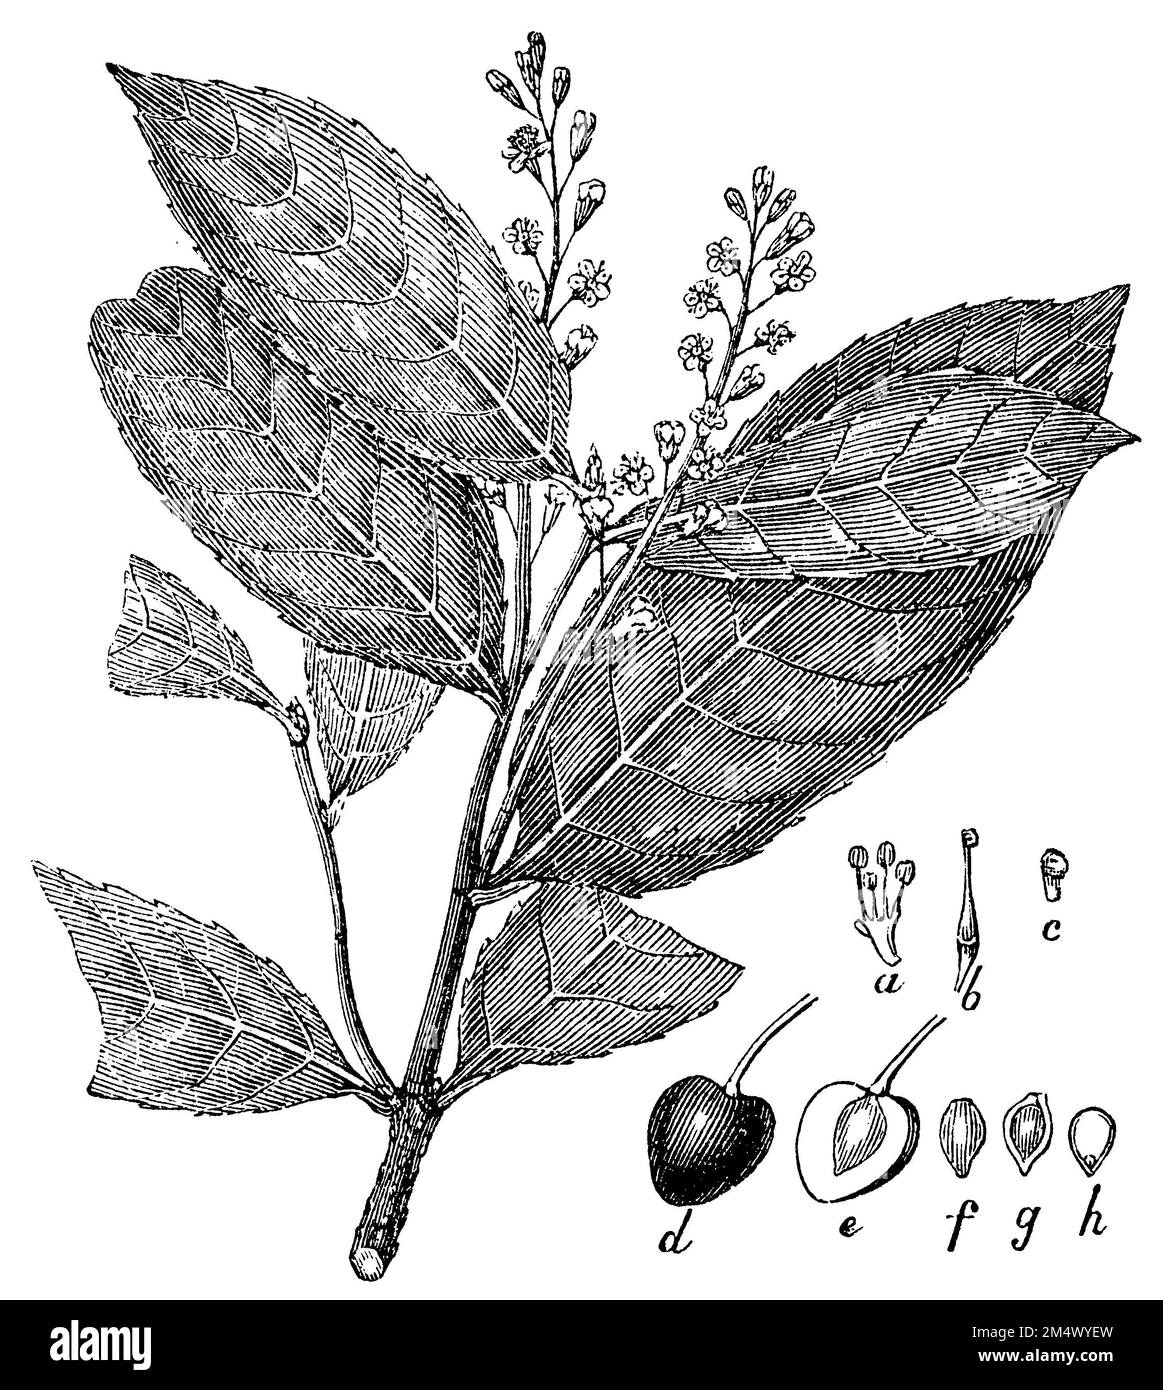 Prunus laurocerasus, Prunus laurocerasus, anonym (livre de biologie, 1881), Lorbeerkirsche, Laurier-cerise Banque D'Images